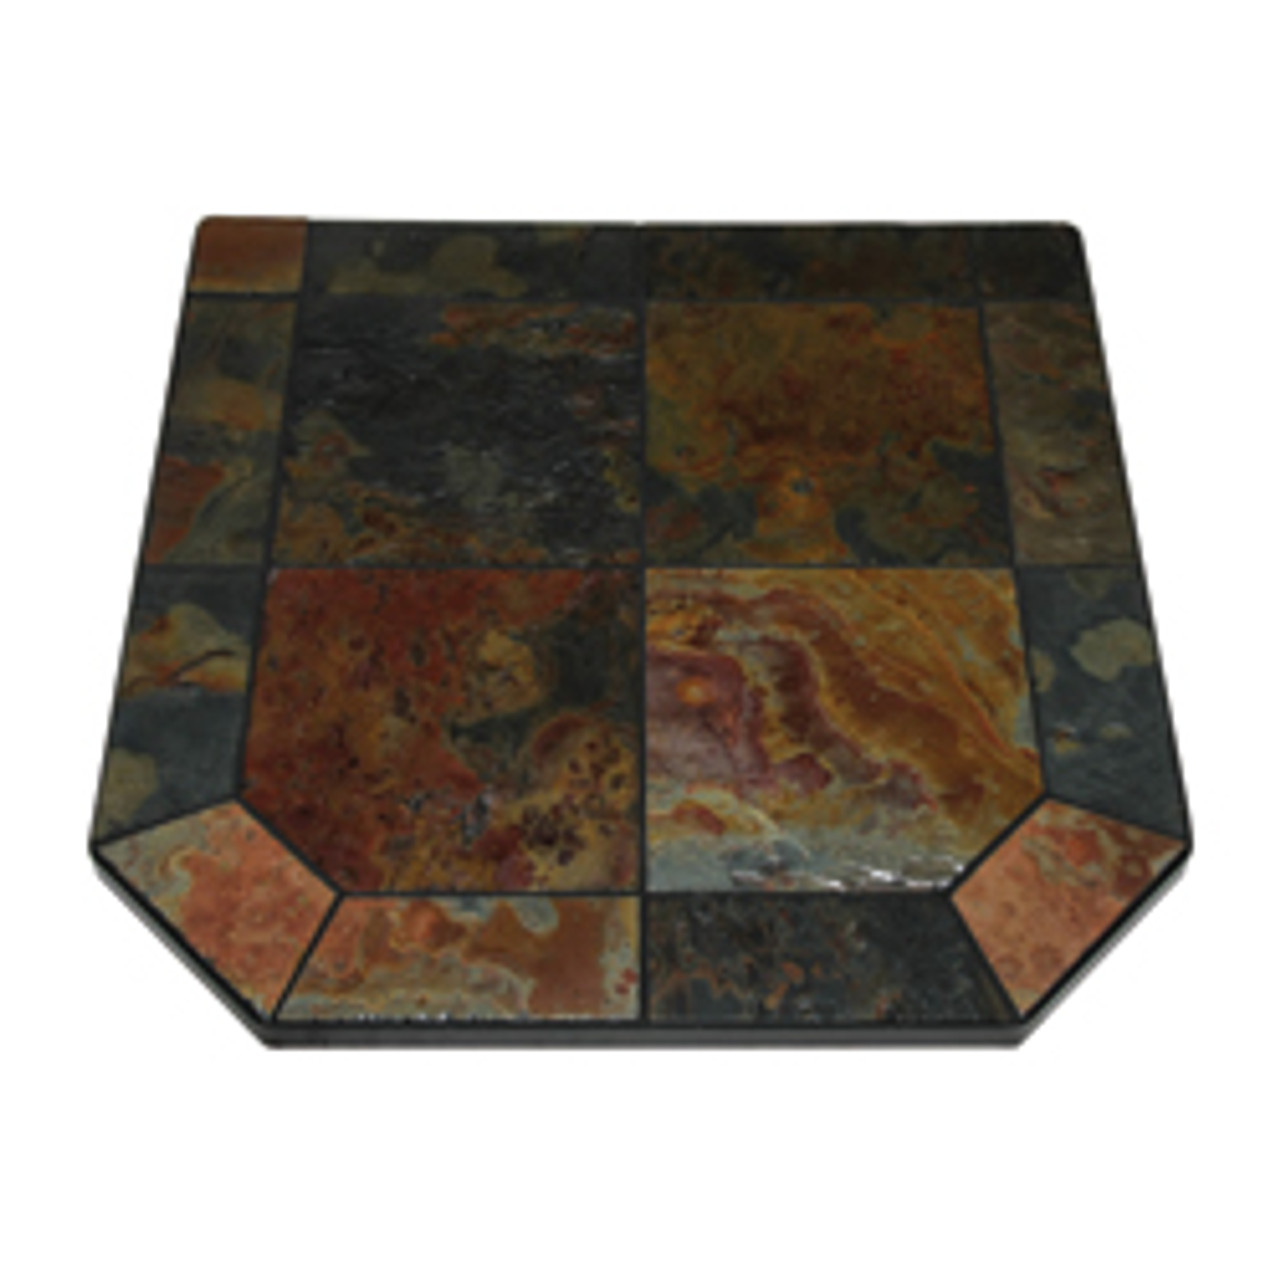 49707 American Panel Carmel Tile Stove Board, Single Cut Corner